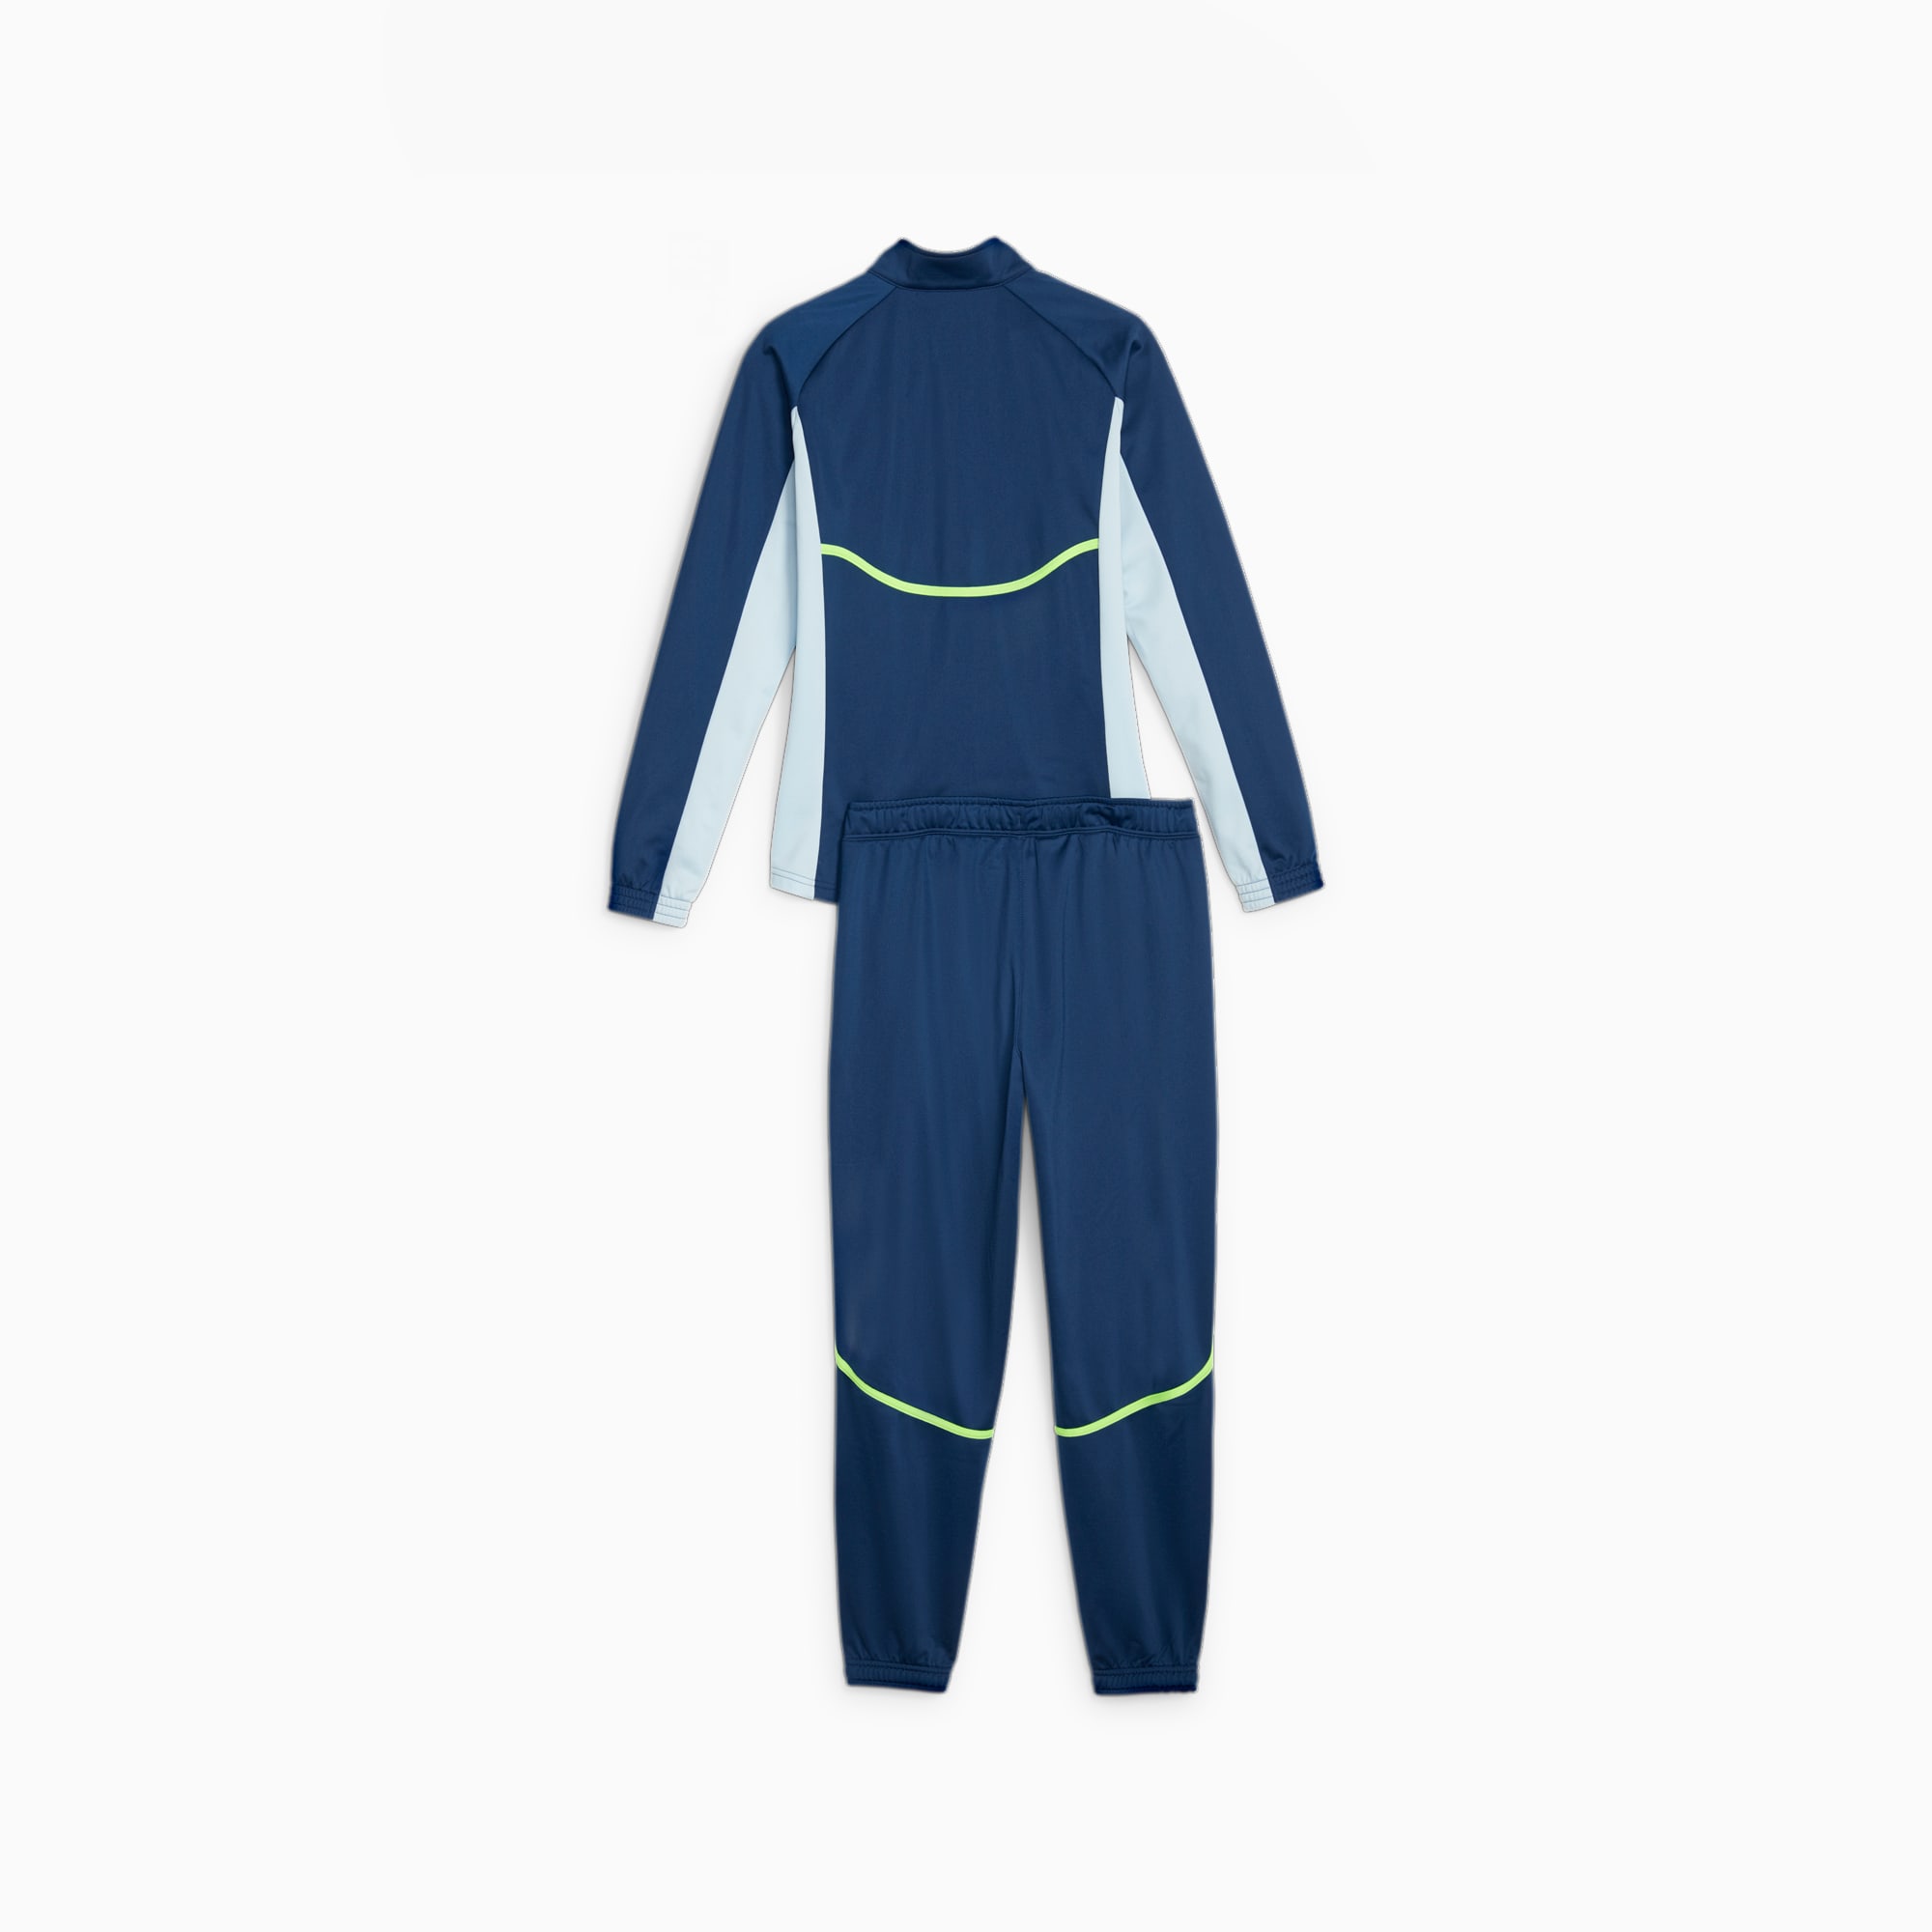 PUMA IndividualBLAZE Fußball Trainingsanzug, Blau/Silber, Größe: M, Kleidung